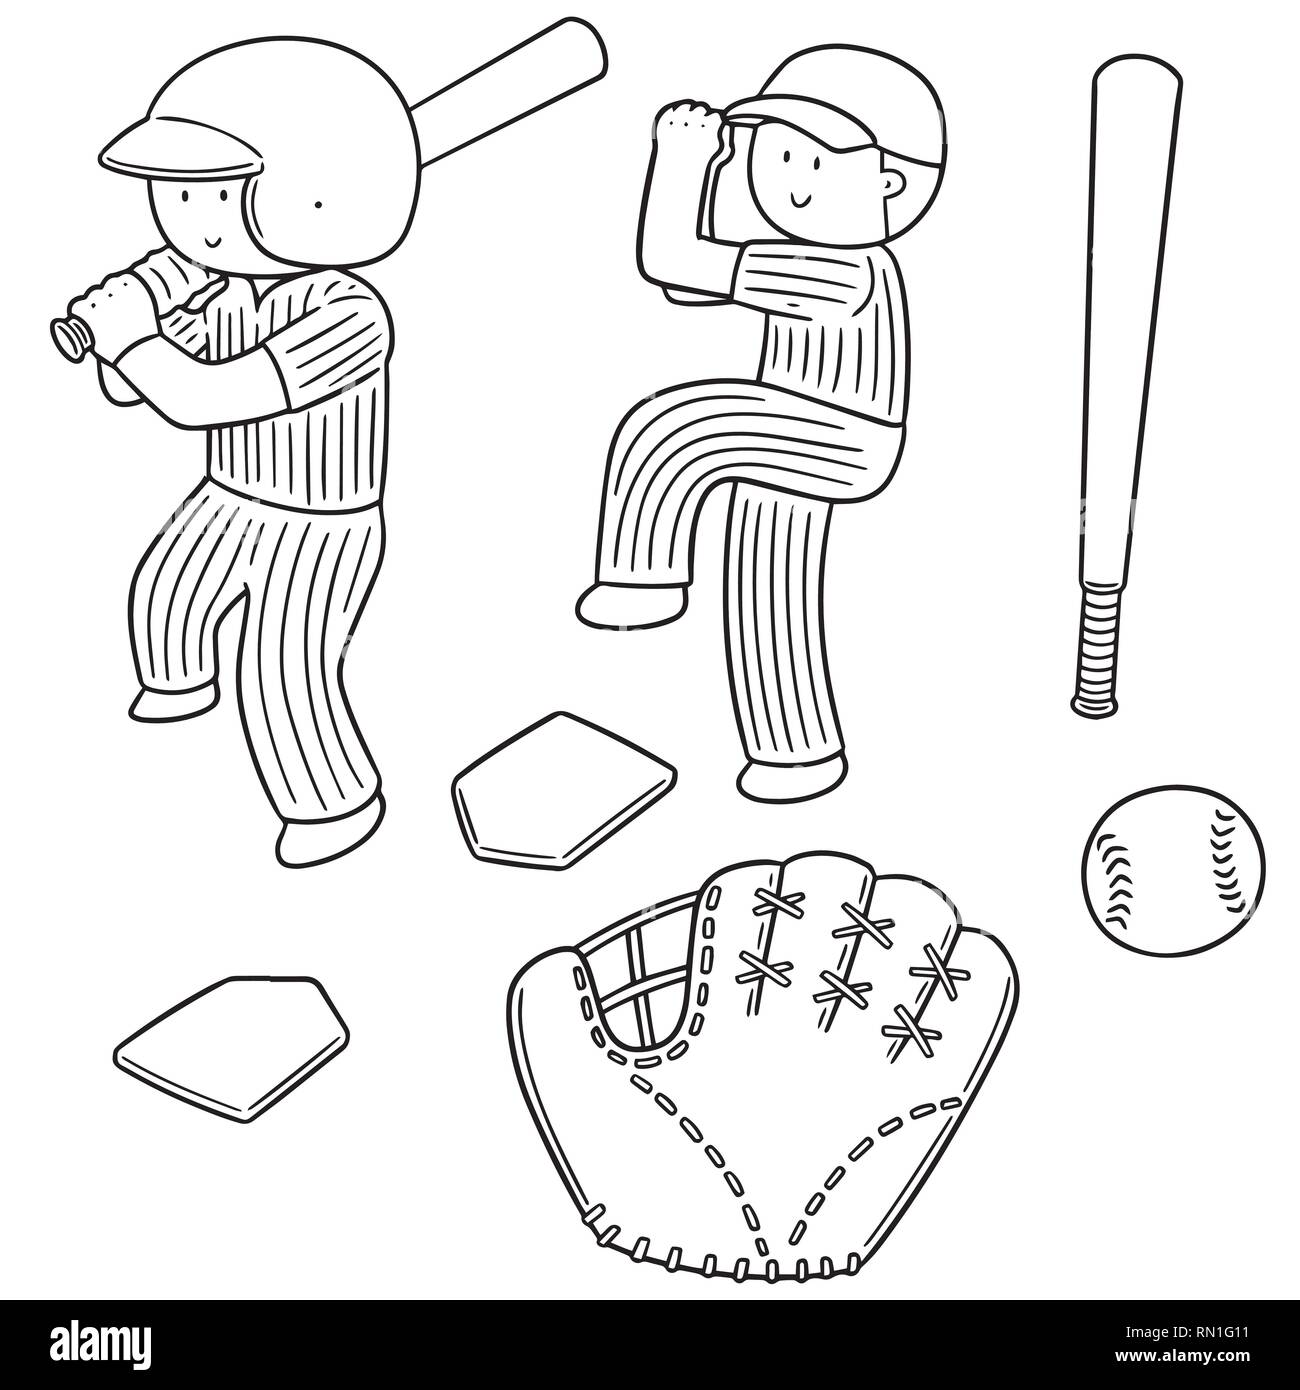 vector set of baseball player and baseball equipment Stock Vector